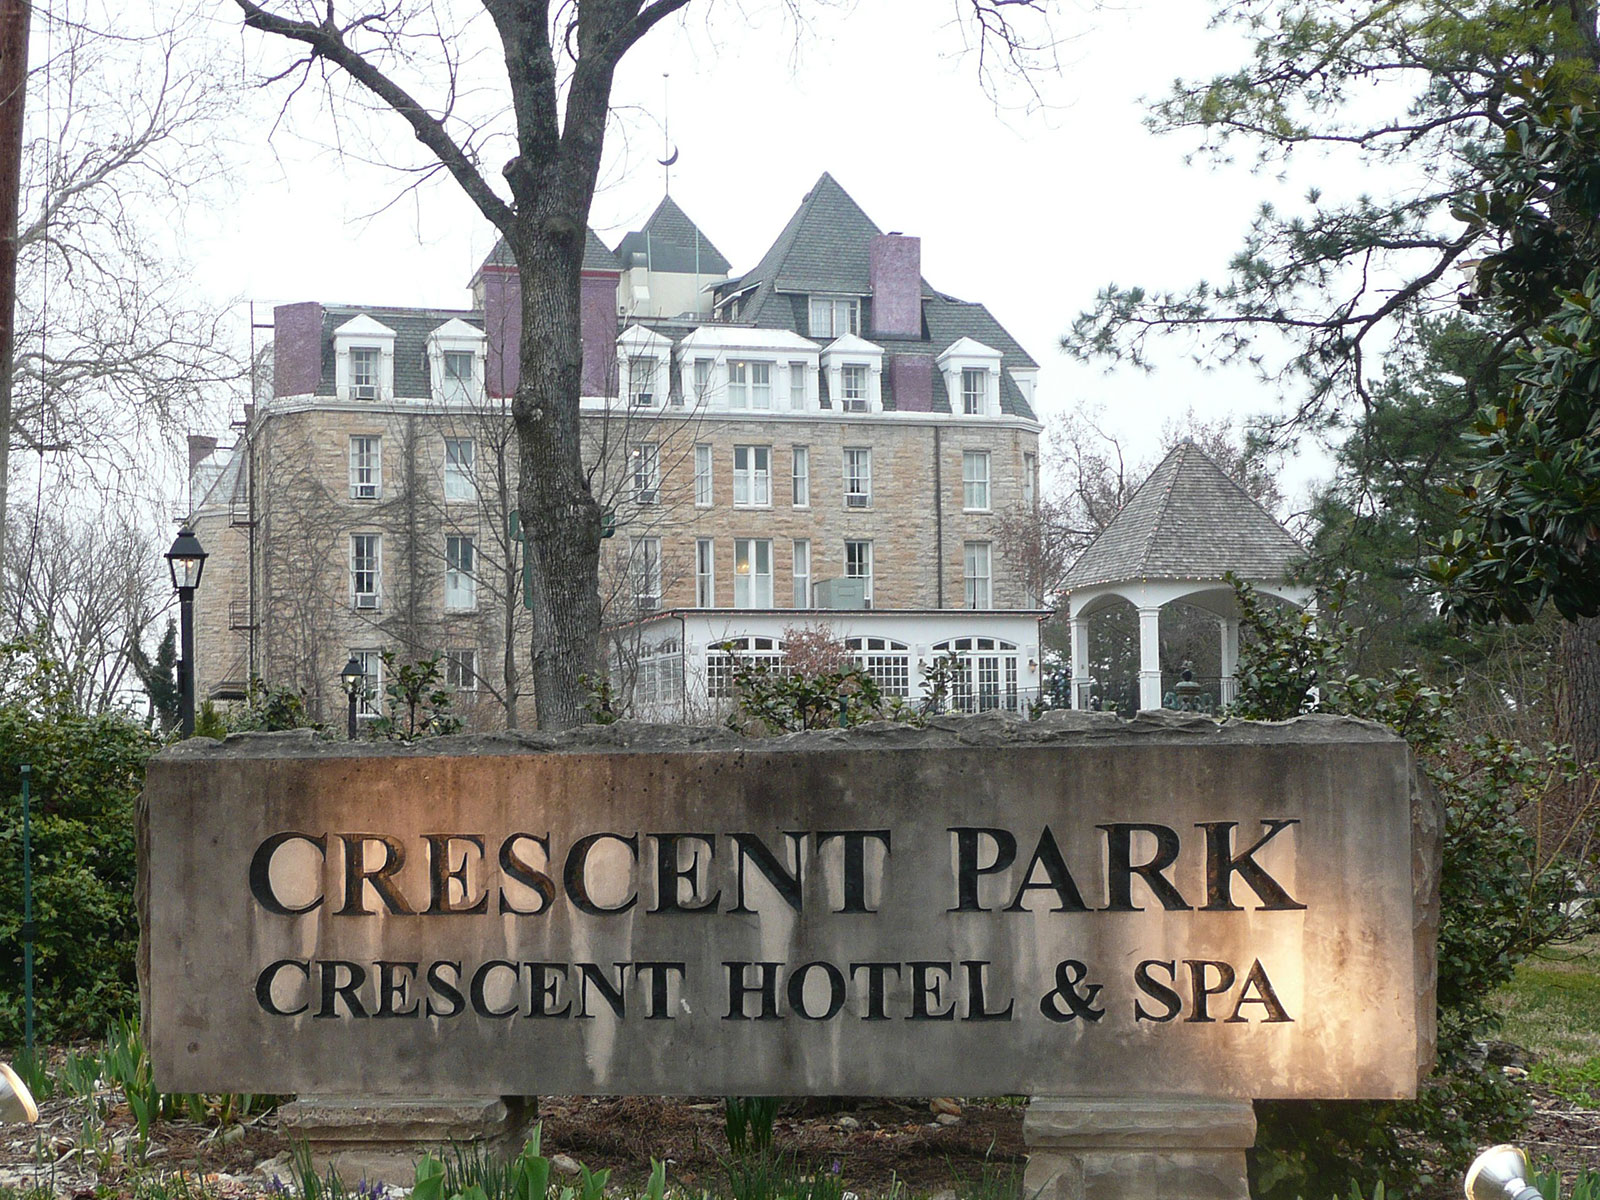 crescent hotel eureka springs - Crescent Park Crescent Hotel & Spa